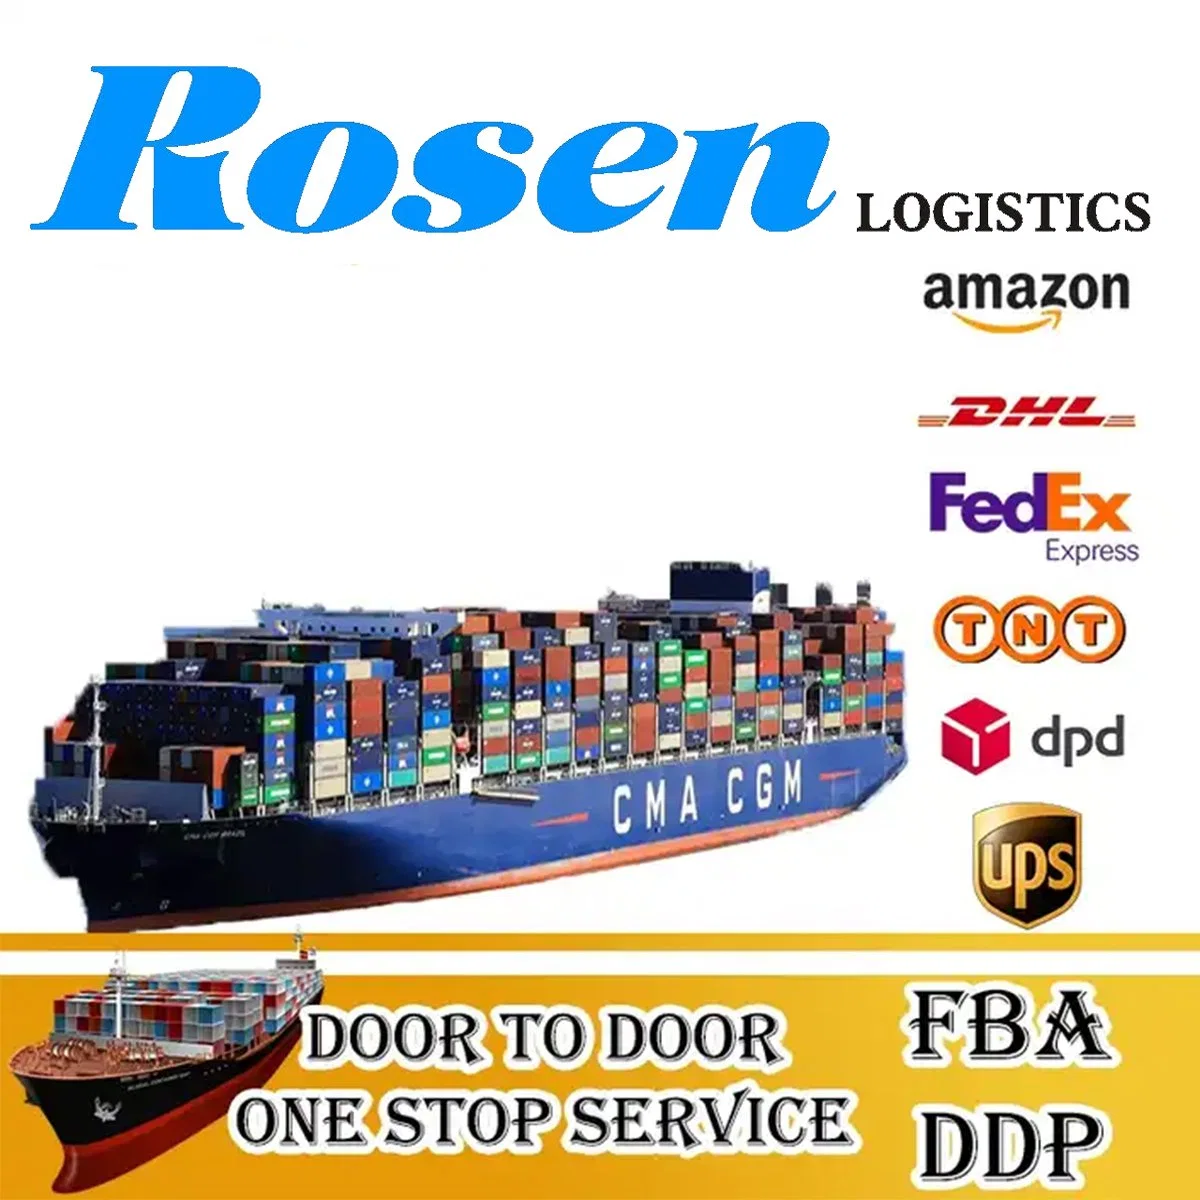 LCL Transport UPS FedEx DHL TNT Express Shipping Agent Logística de Amazon De China a Dubai